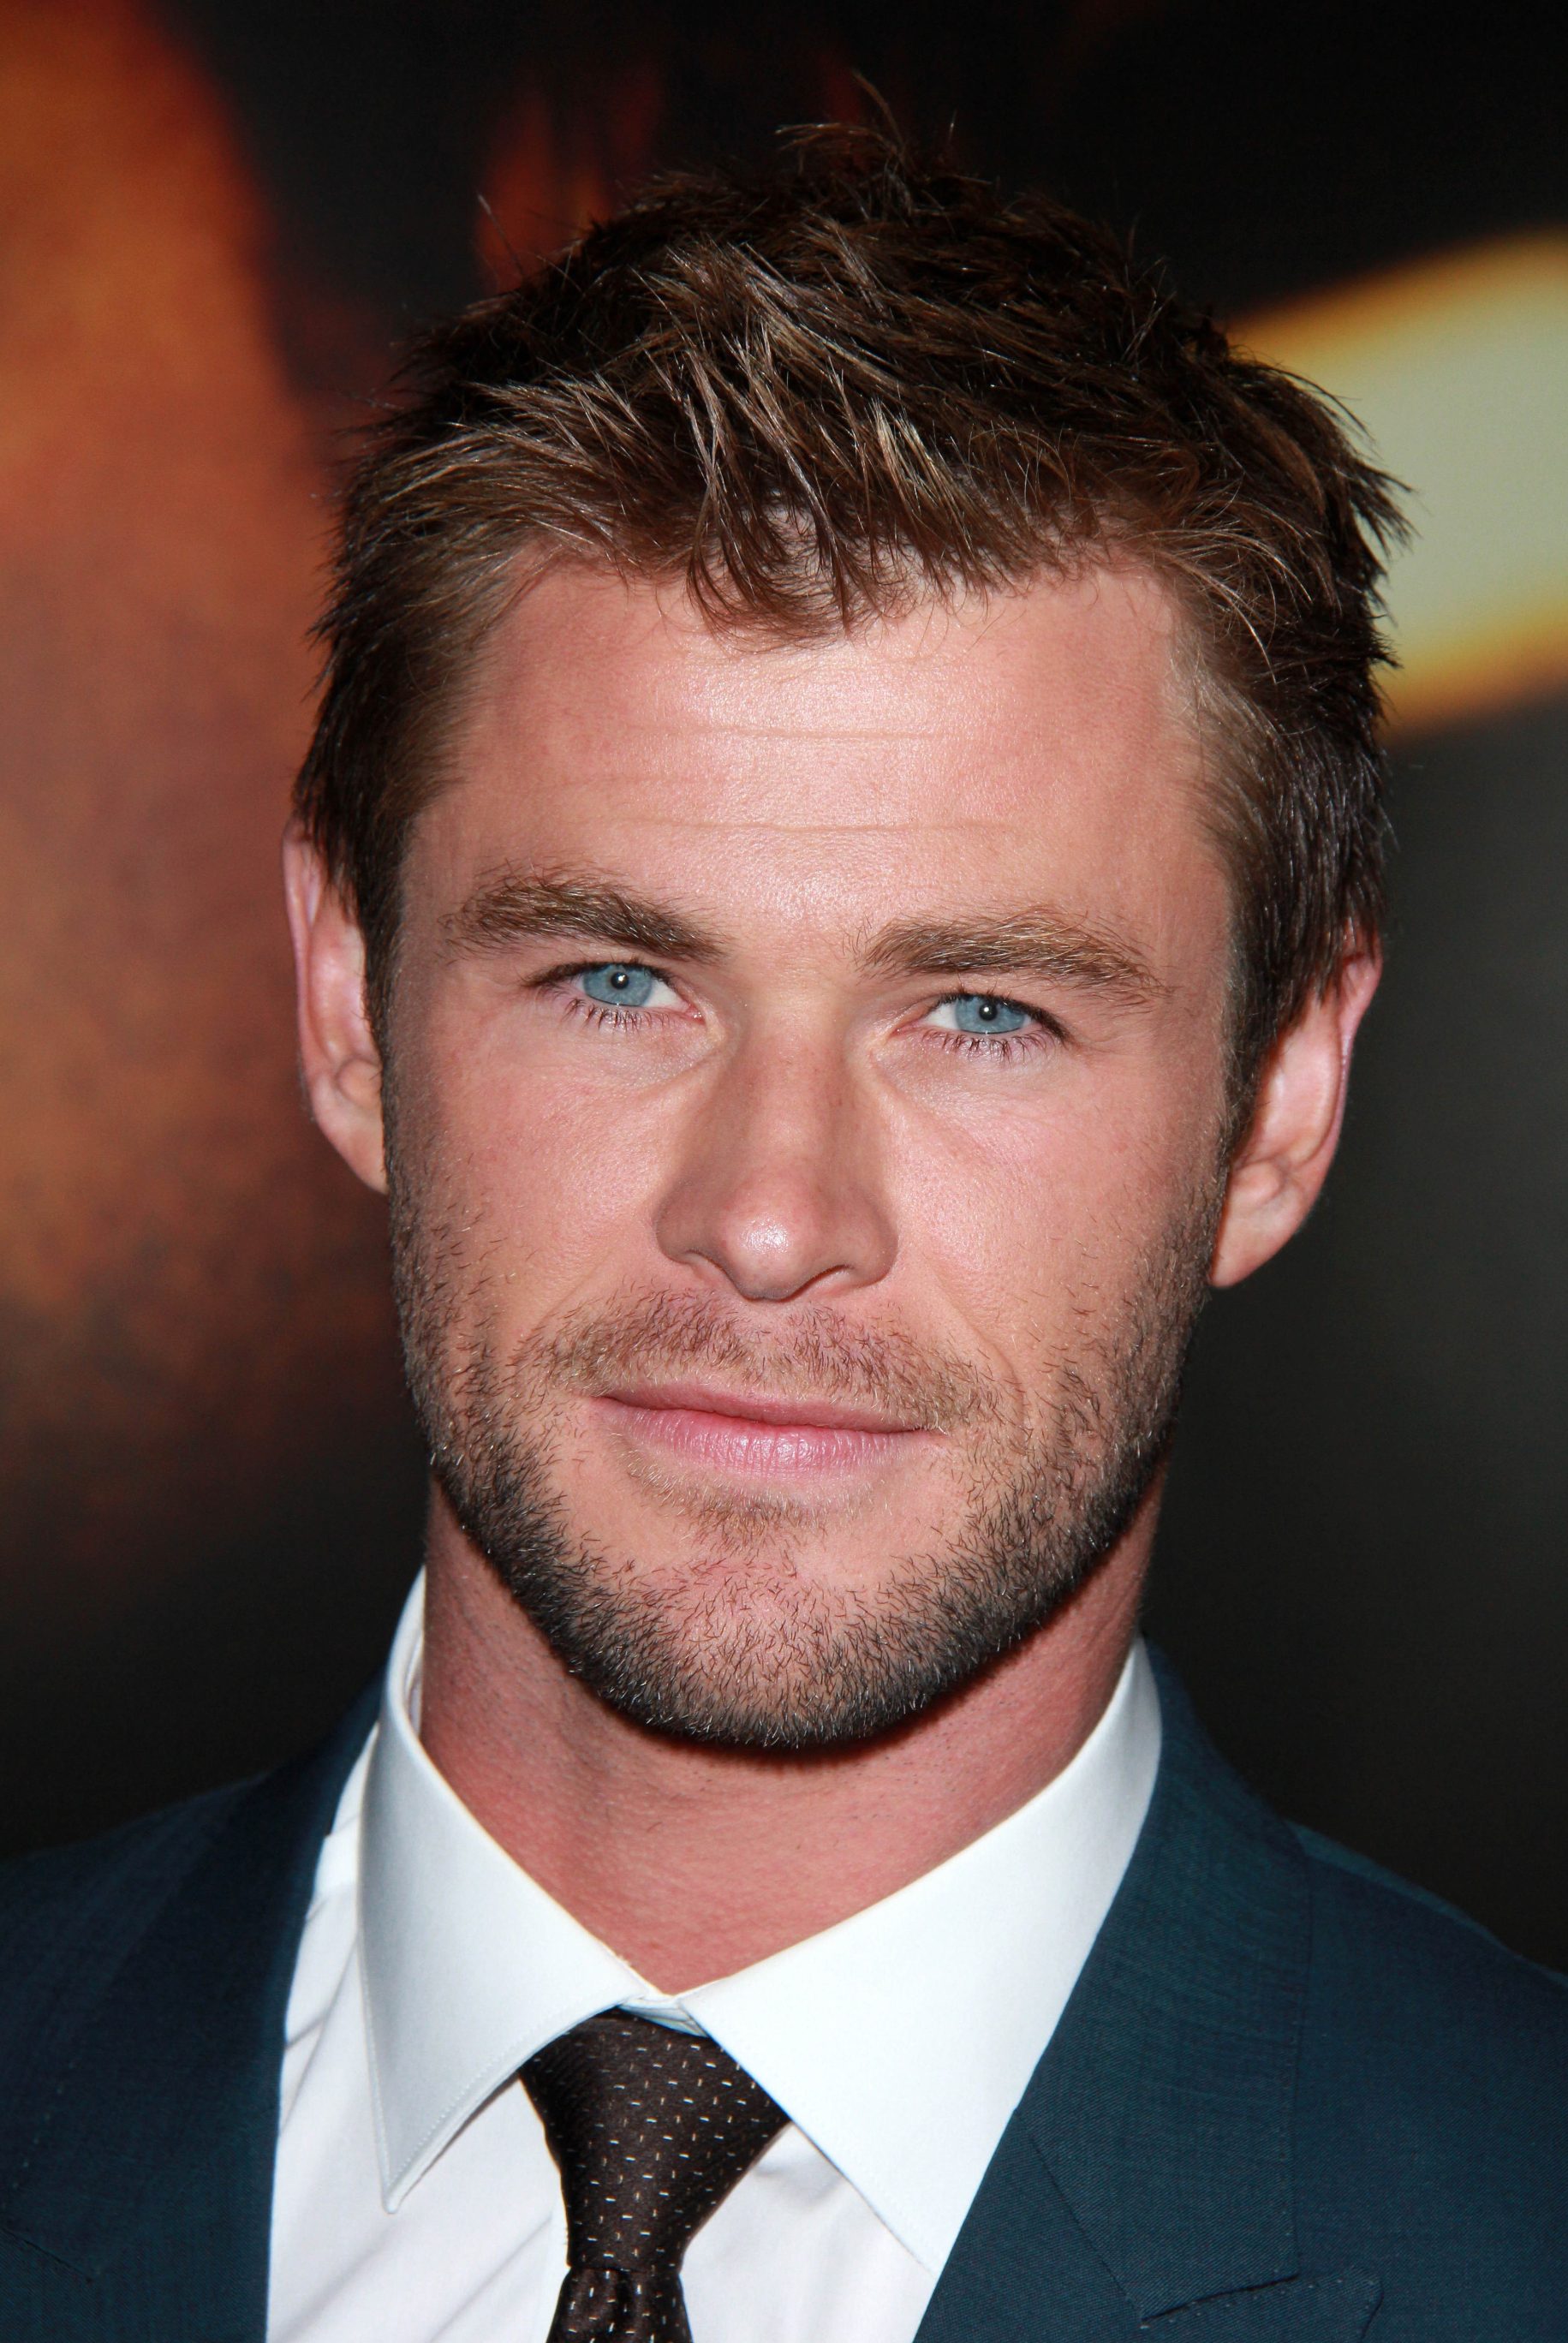 Chris Hemsworth 
Marvel’s Thor
Chris Hemsworth – Marvel’s Thor